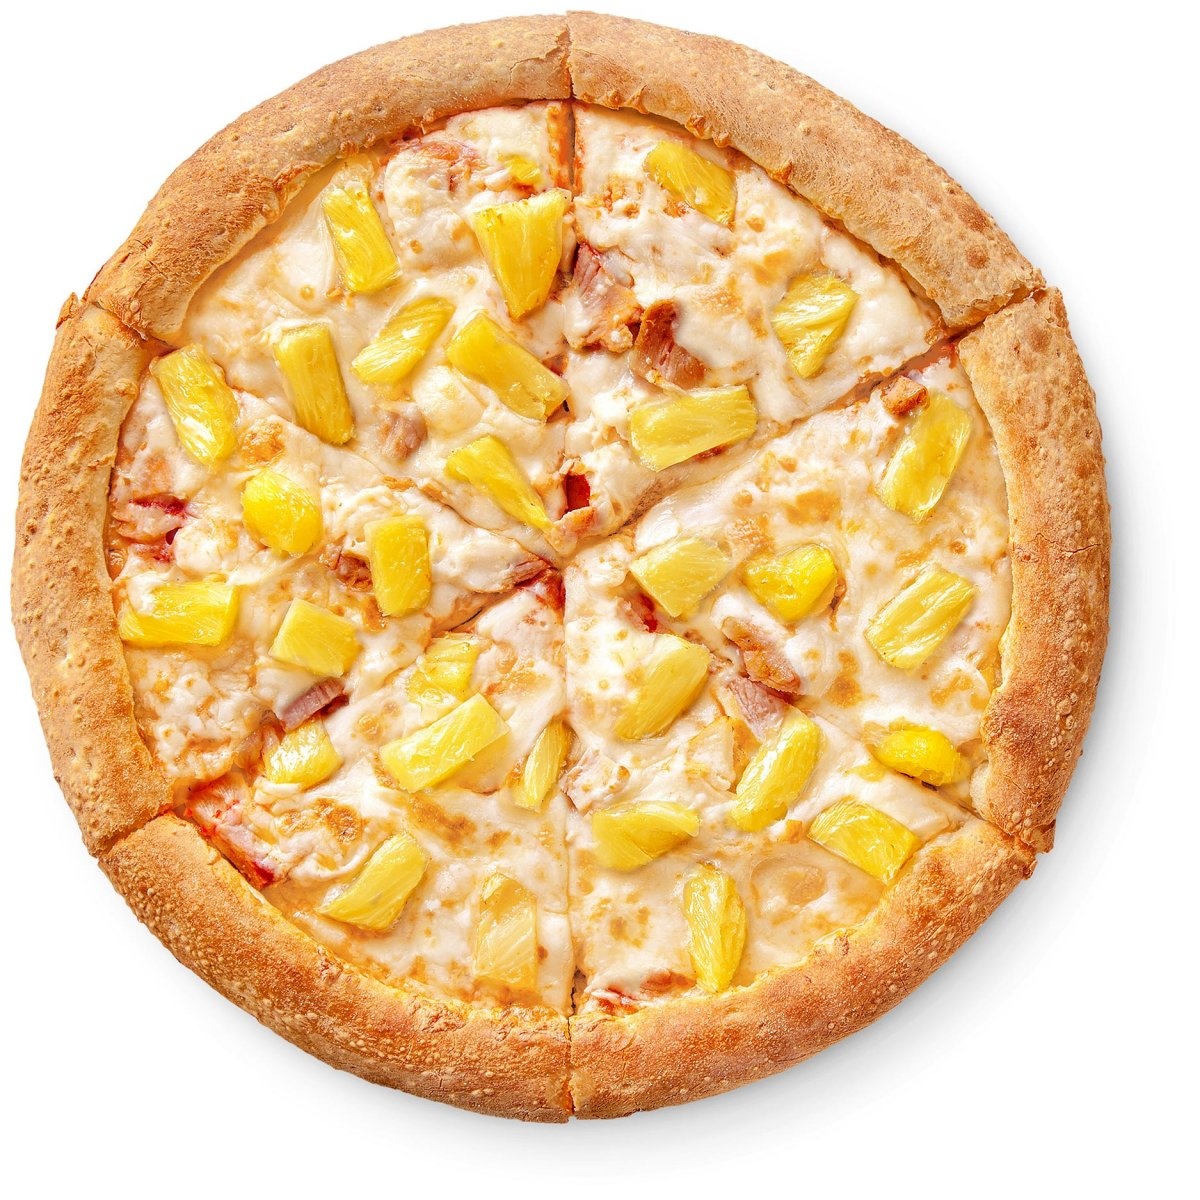 состав пиццы пепперони в додо пицца фото 91